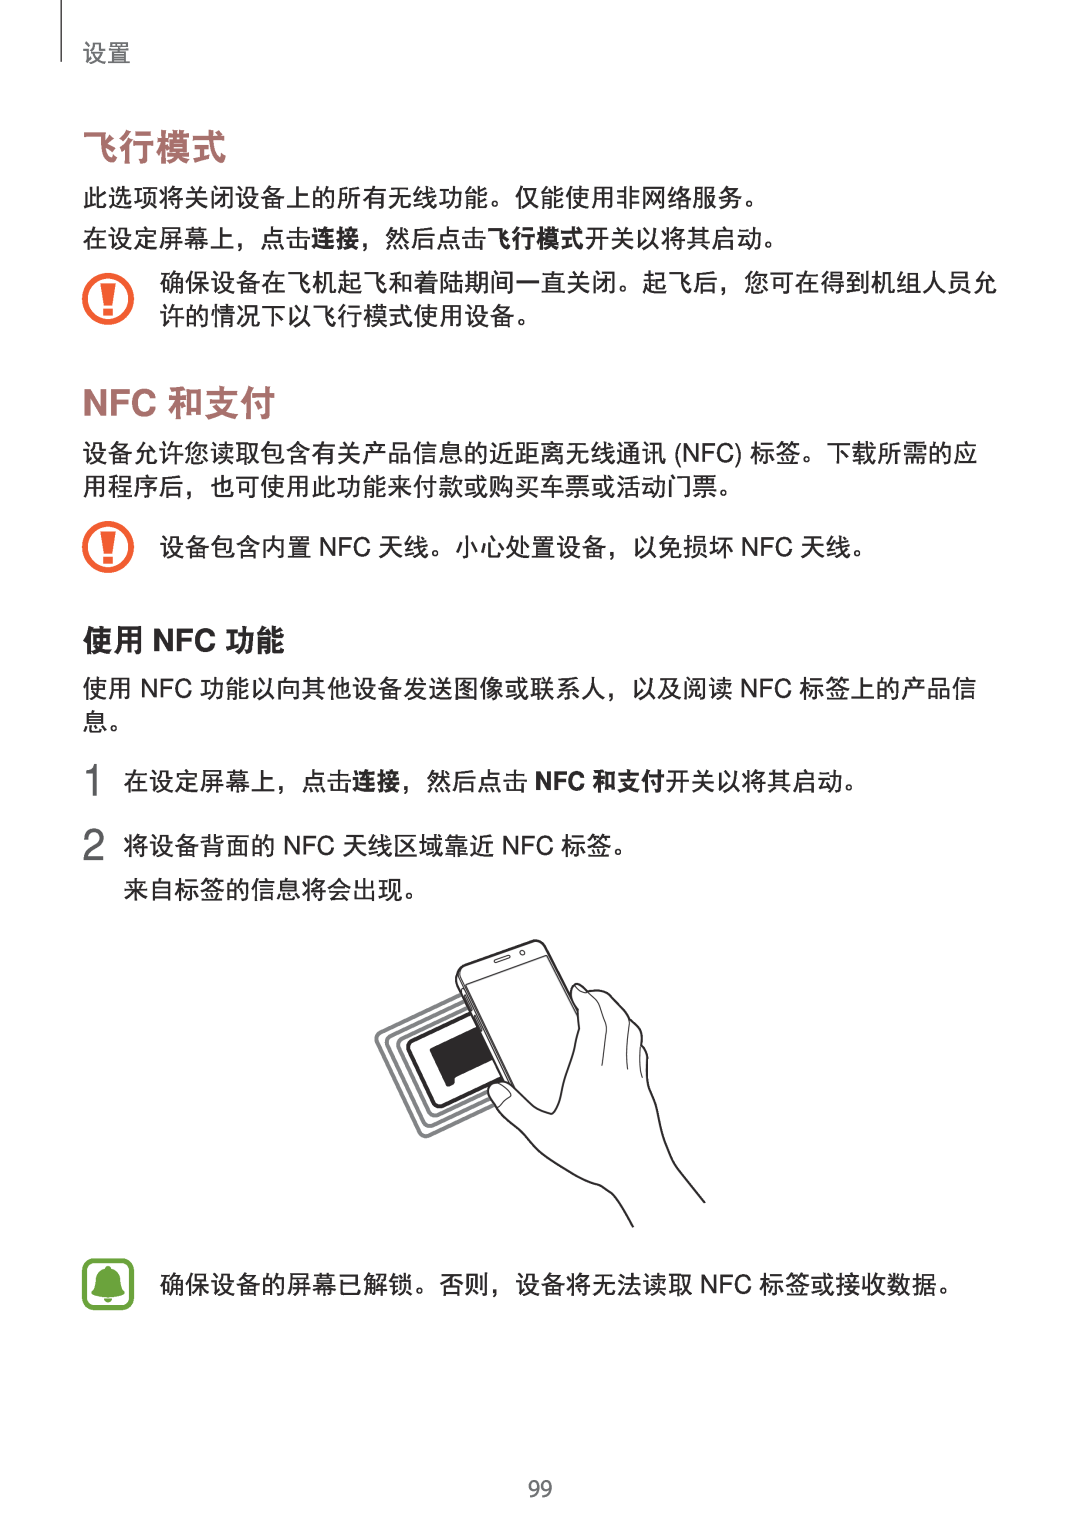 Samsung SM-A710FEDFXXV 飞行模式, Nfc 和支付, 使用 Nfc 功能, 设备包含内置 Nfc 天线。小心处置设备，以免损坏 Nfc 天线。, 1 在设定屏幕上，点击连接，然后点击 NFC 和支付开关以将其启动。 